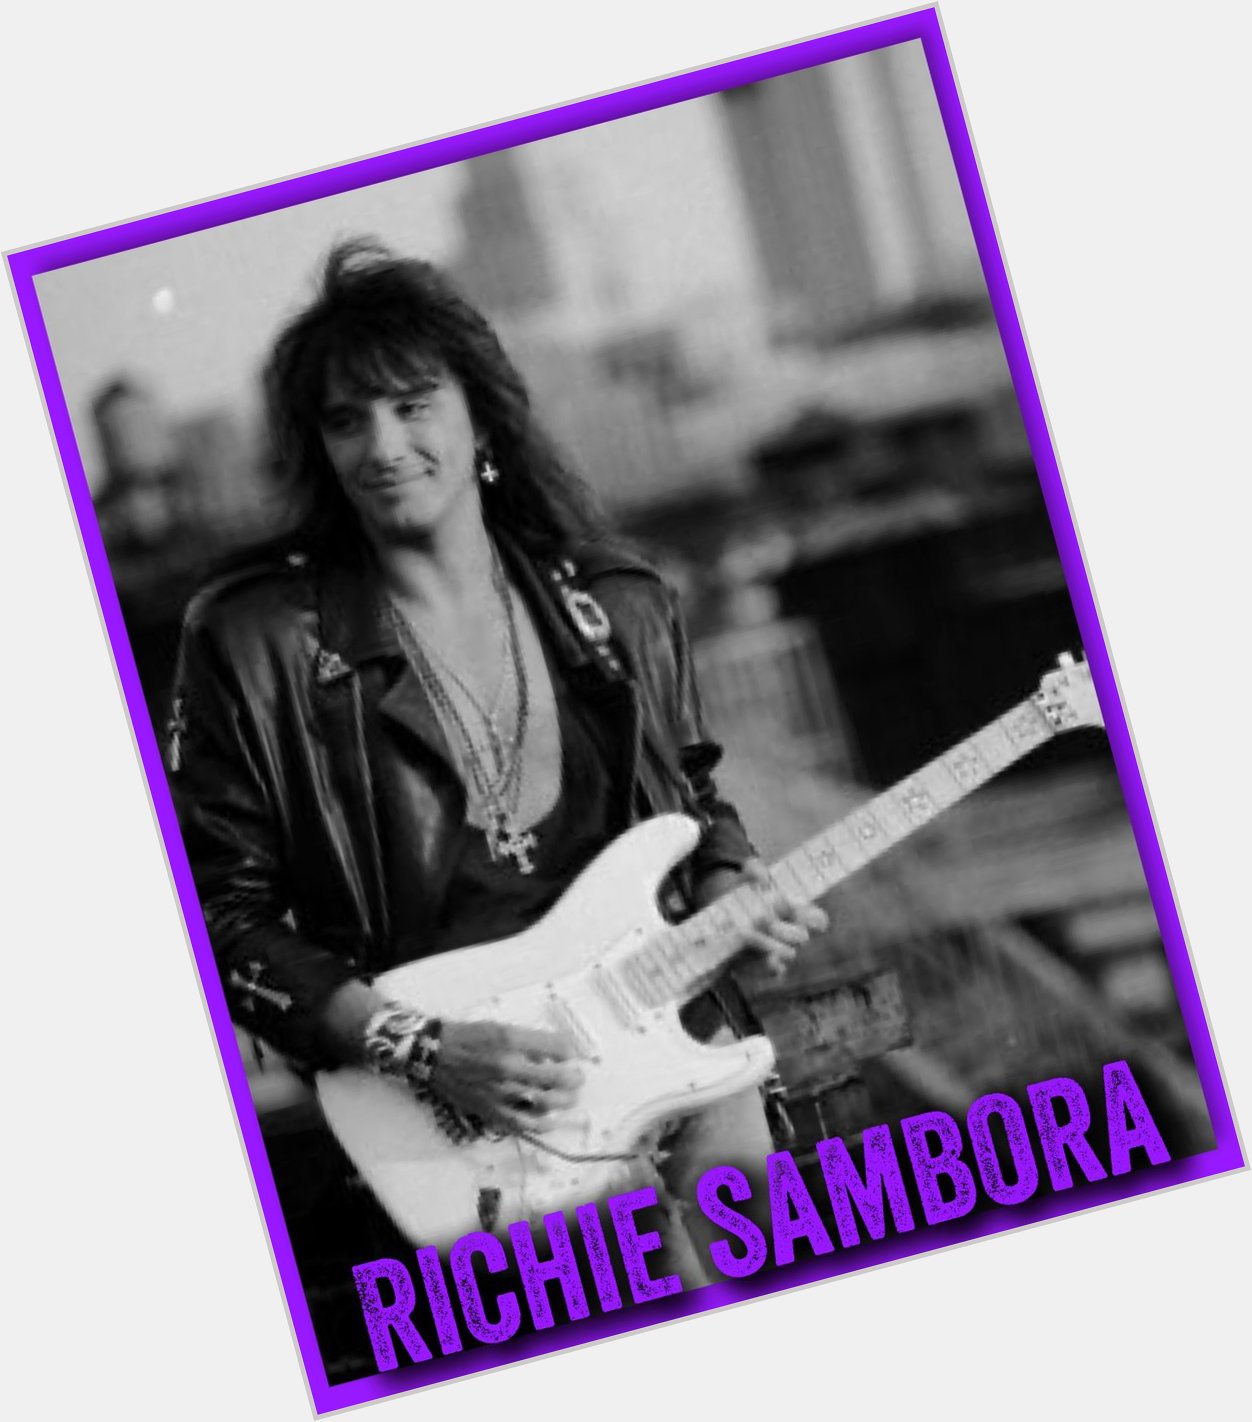 Happy Birthday Richie Sambora
July 11, 1959 Perth Amboy, New Jersey 